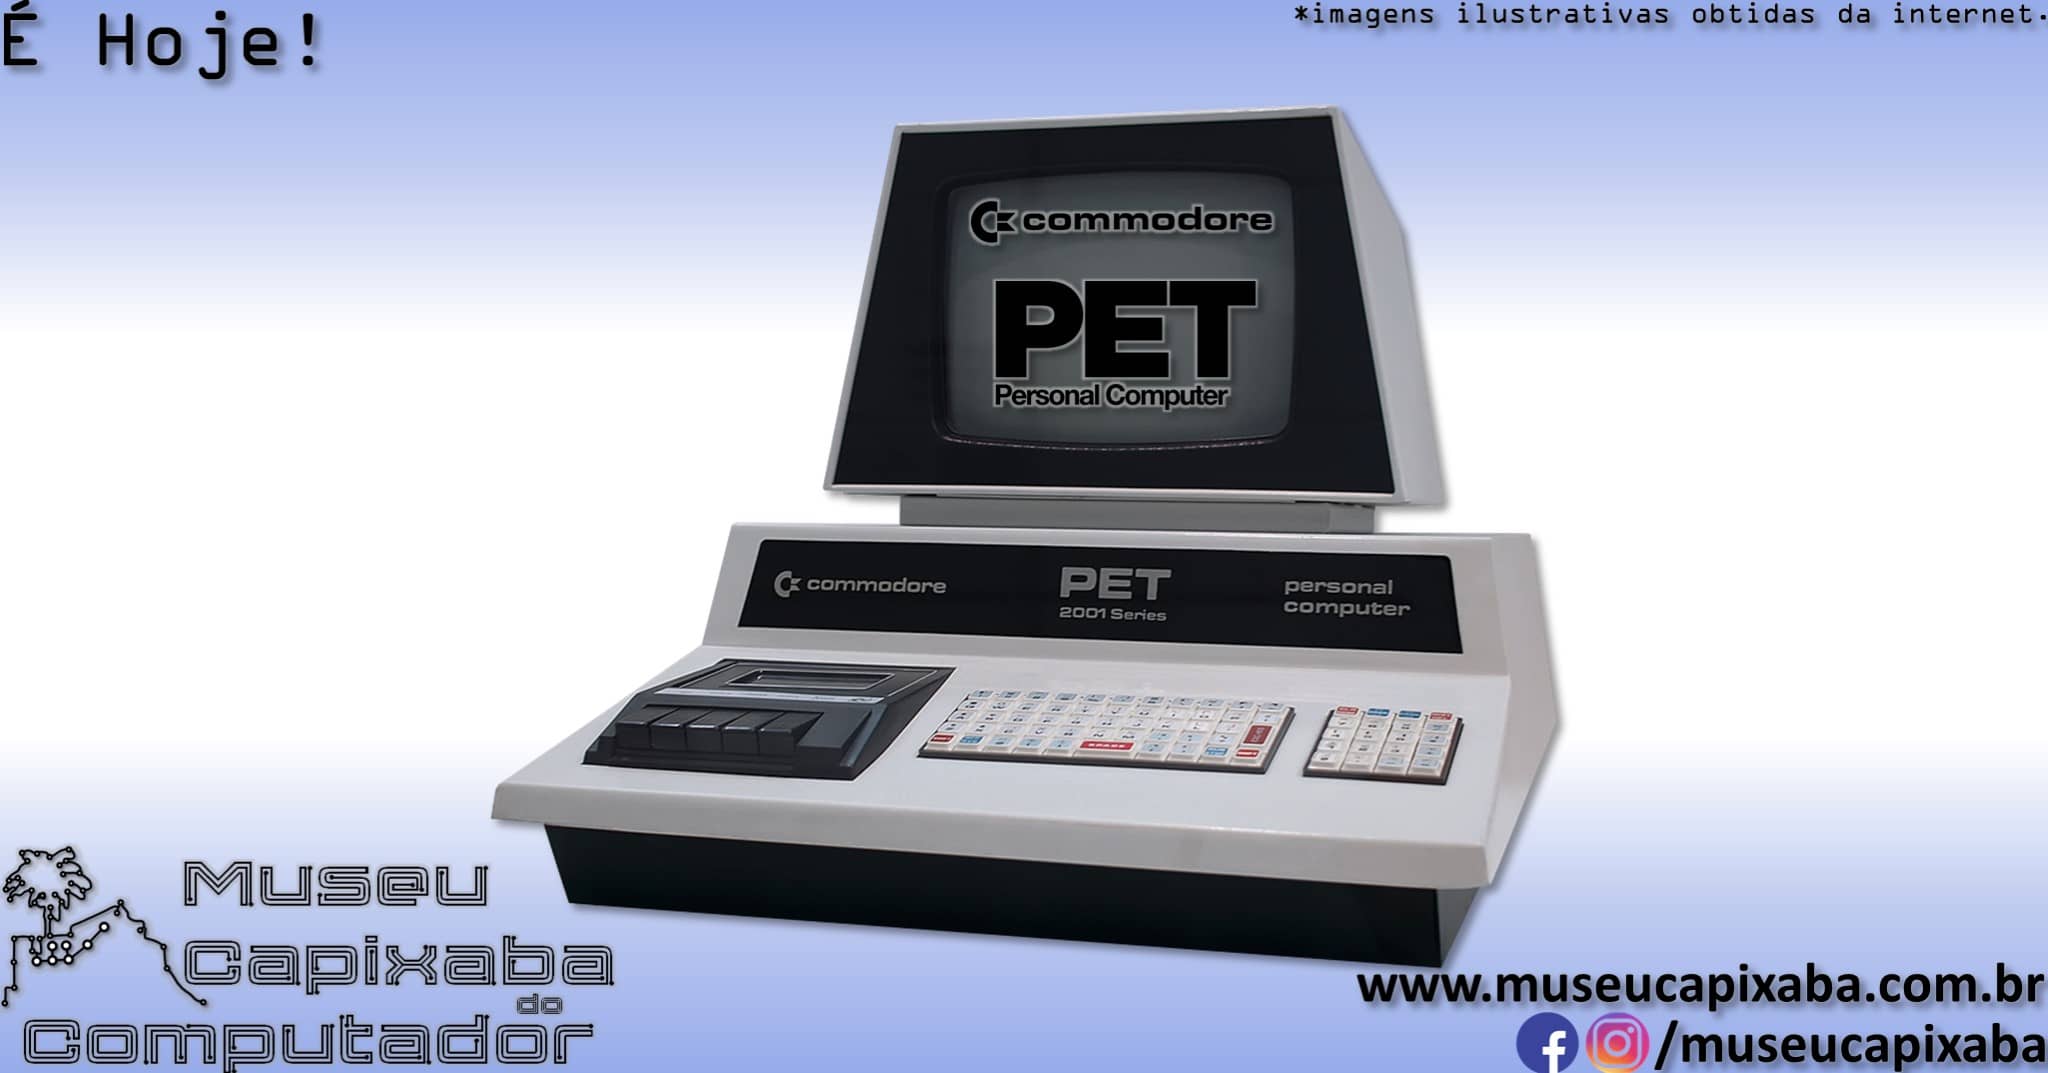 empresa Commodore International 4